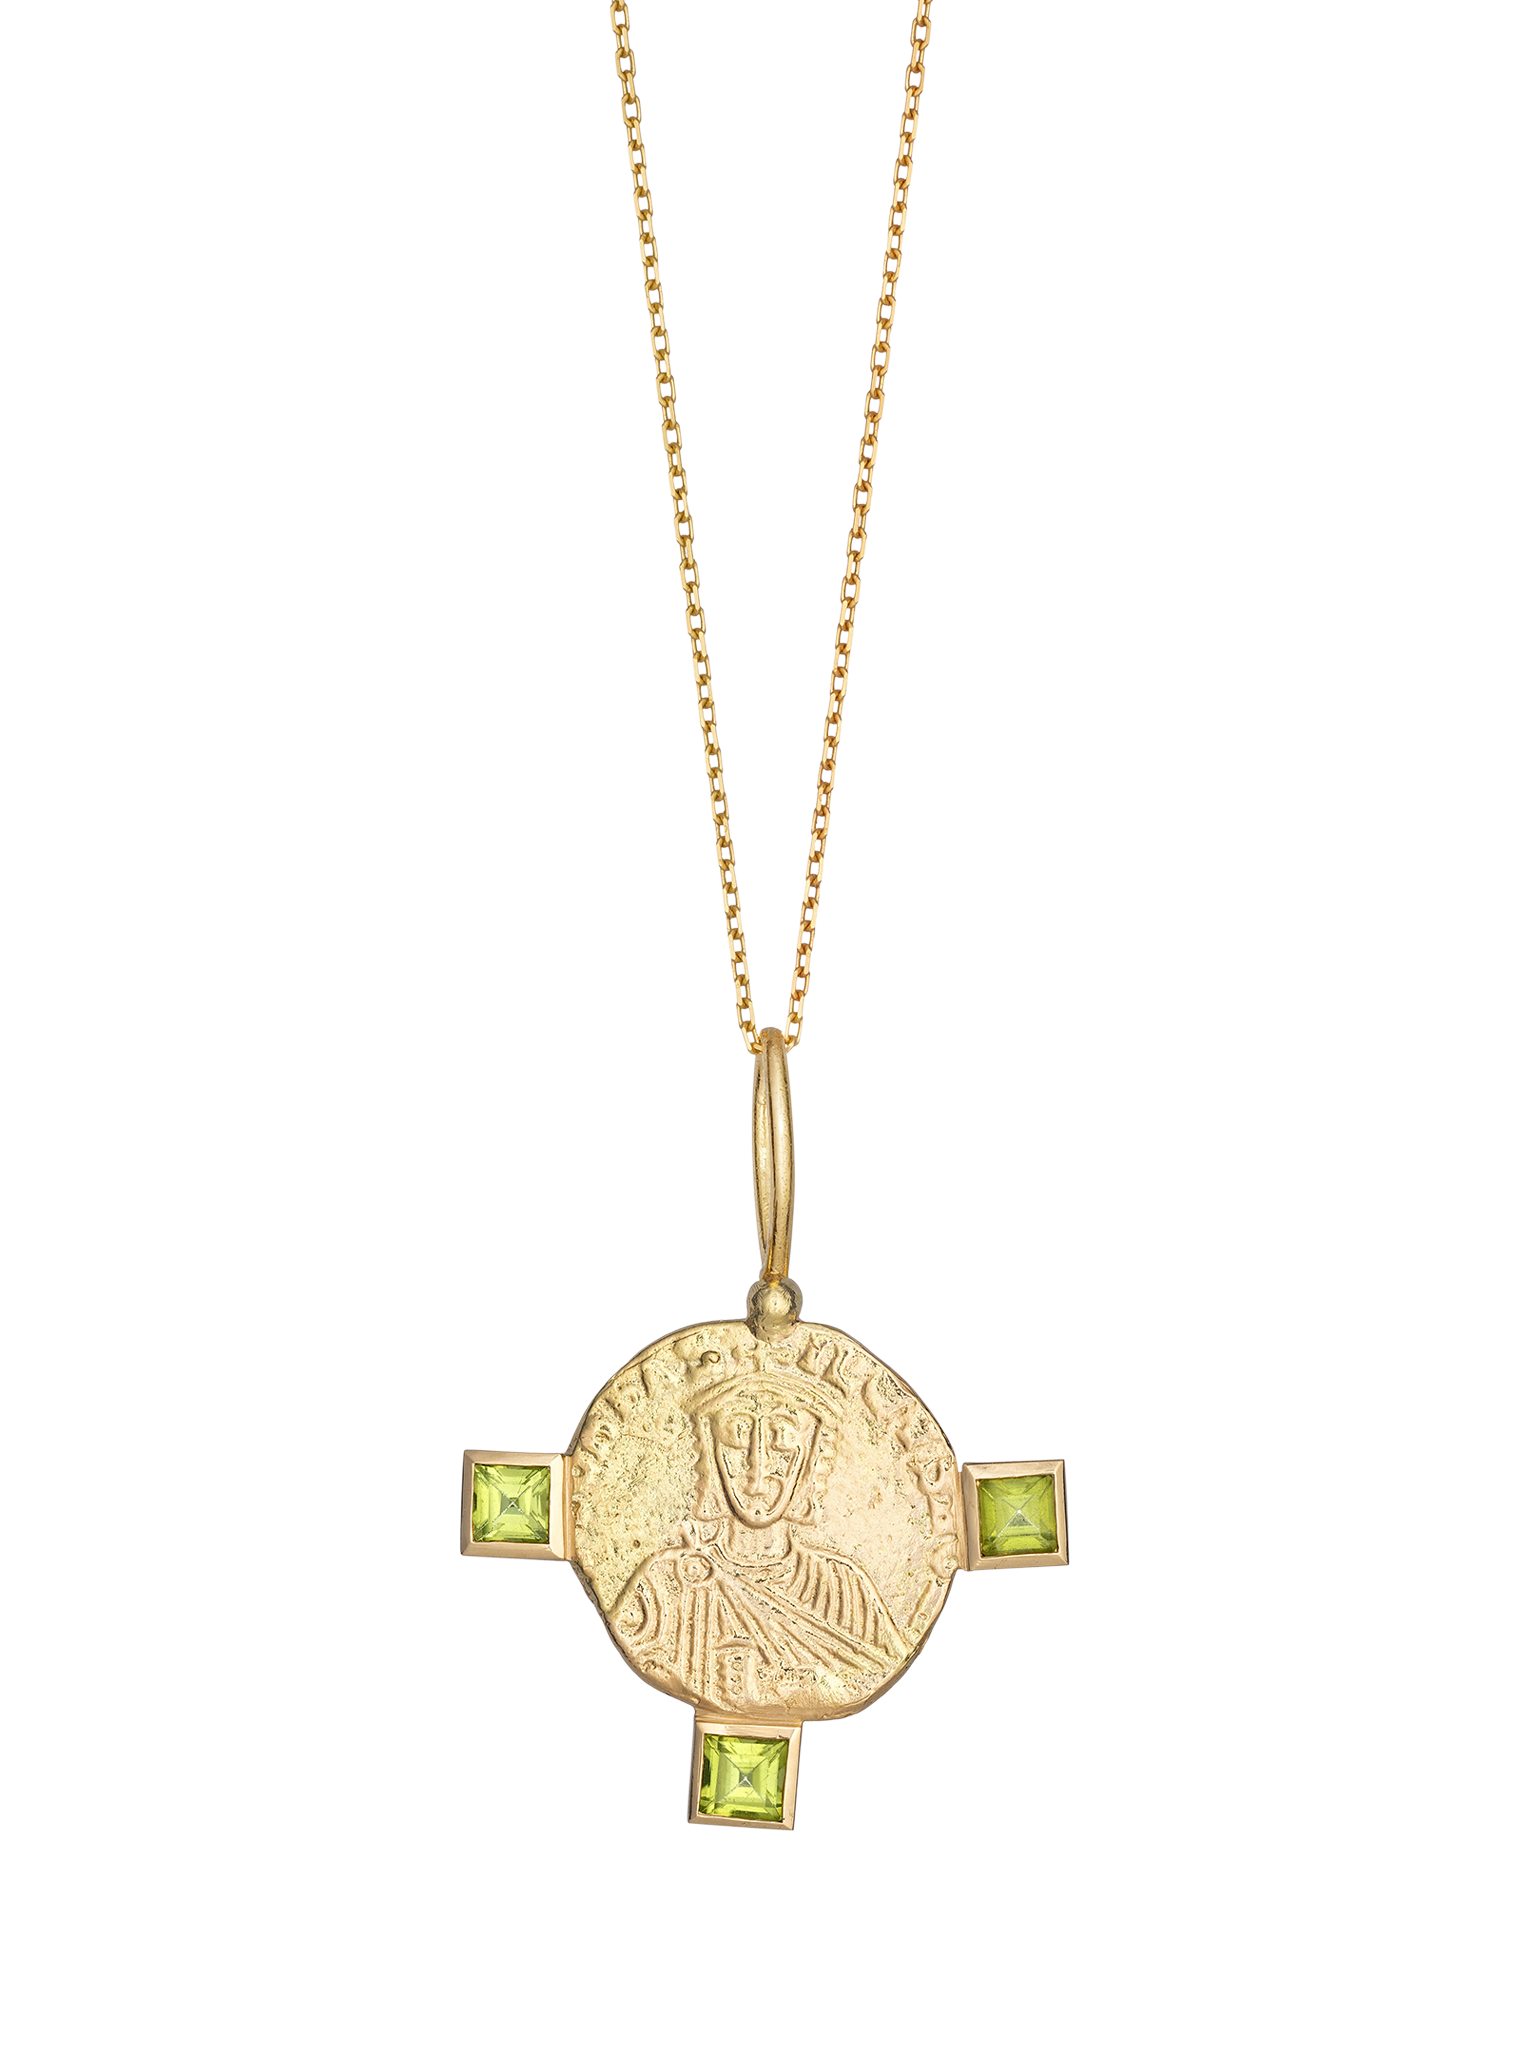 Byzantine grace medallion with three peridot - 18k solid gold